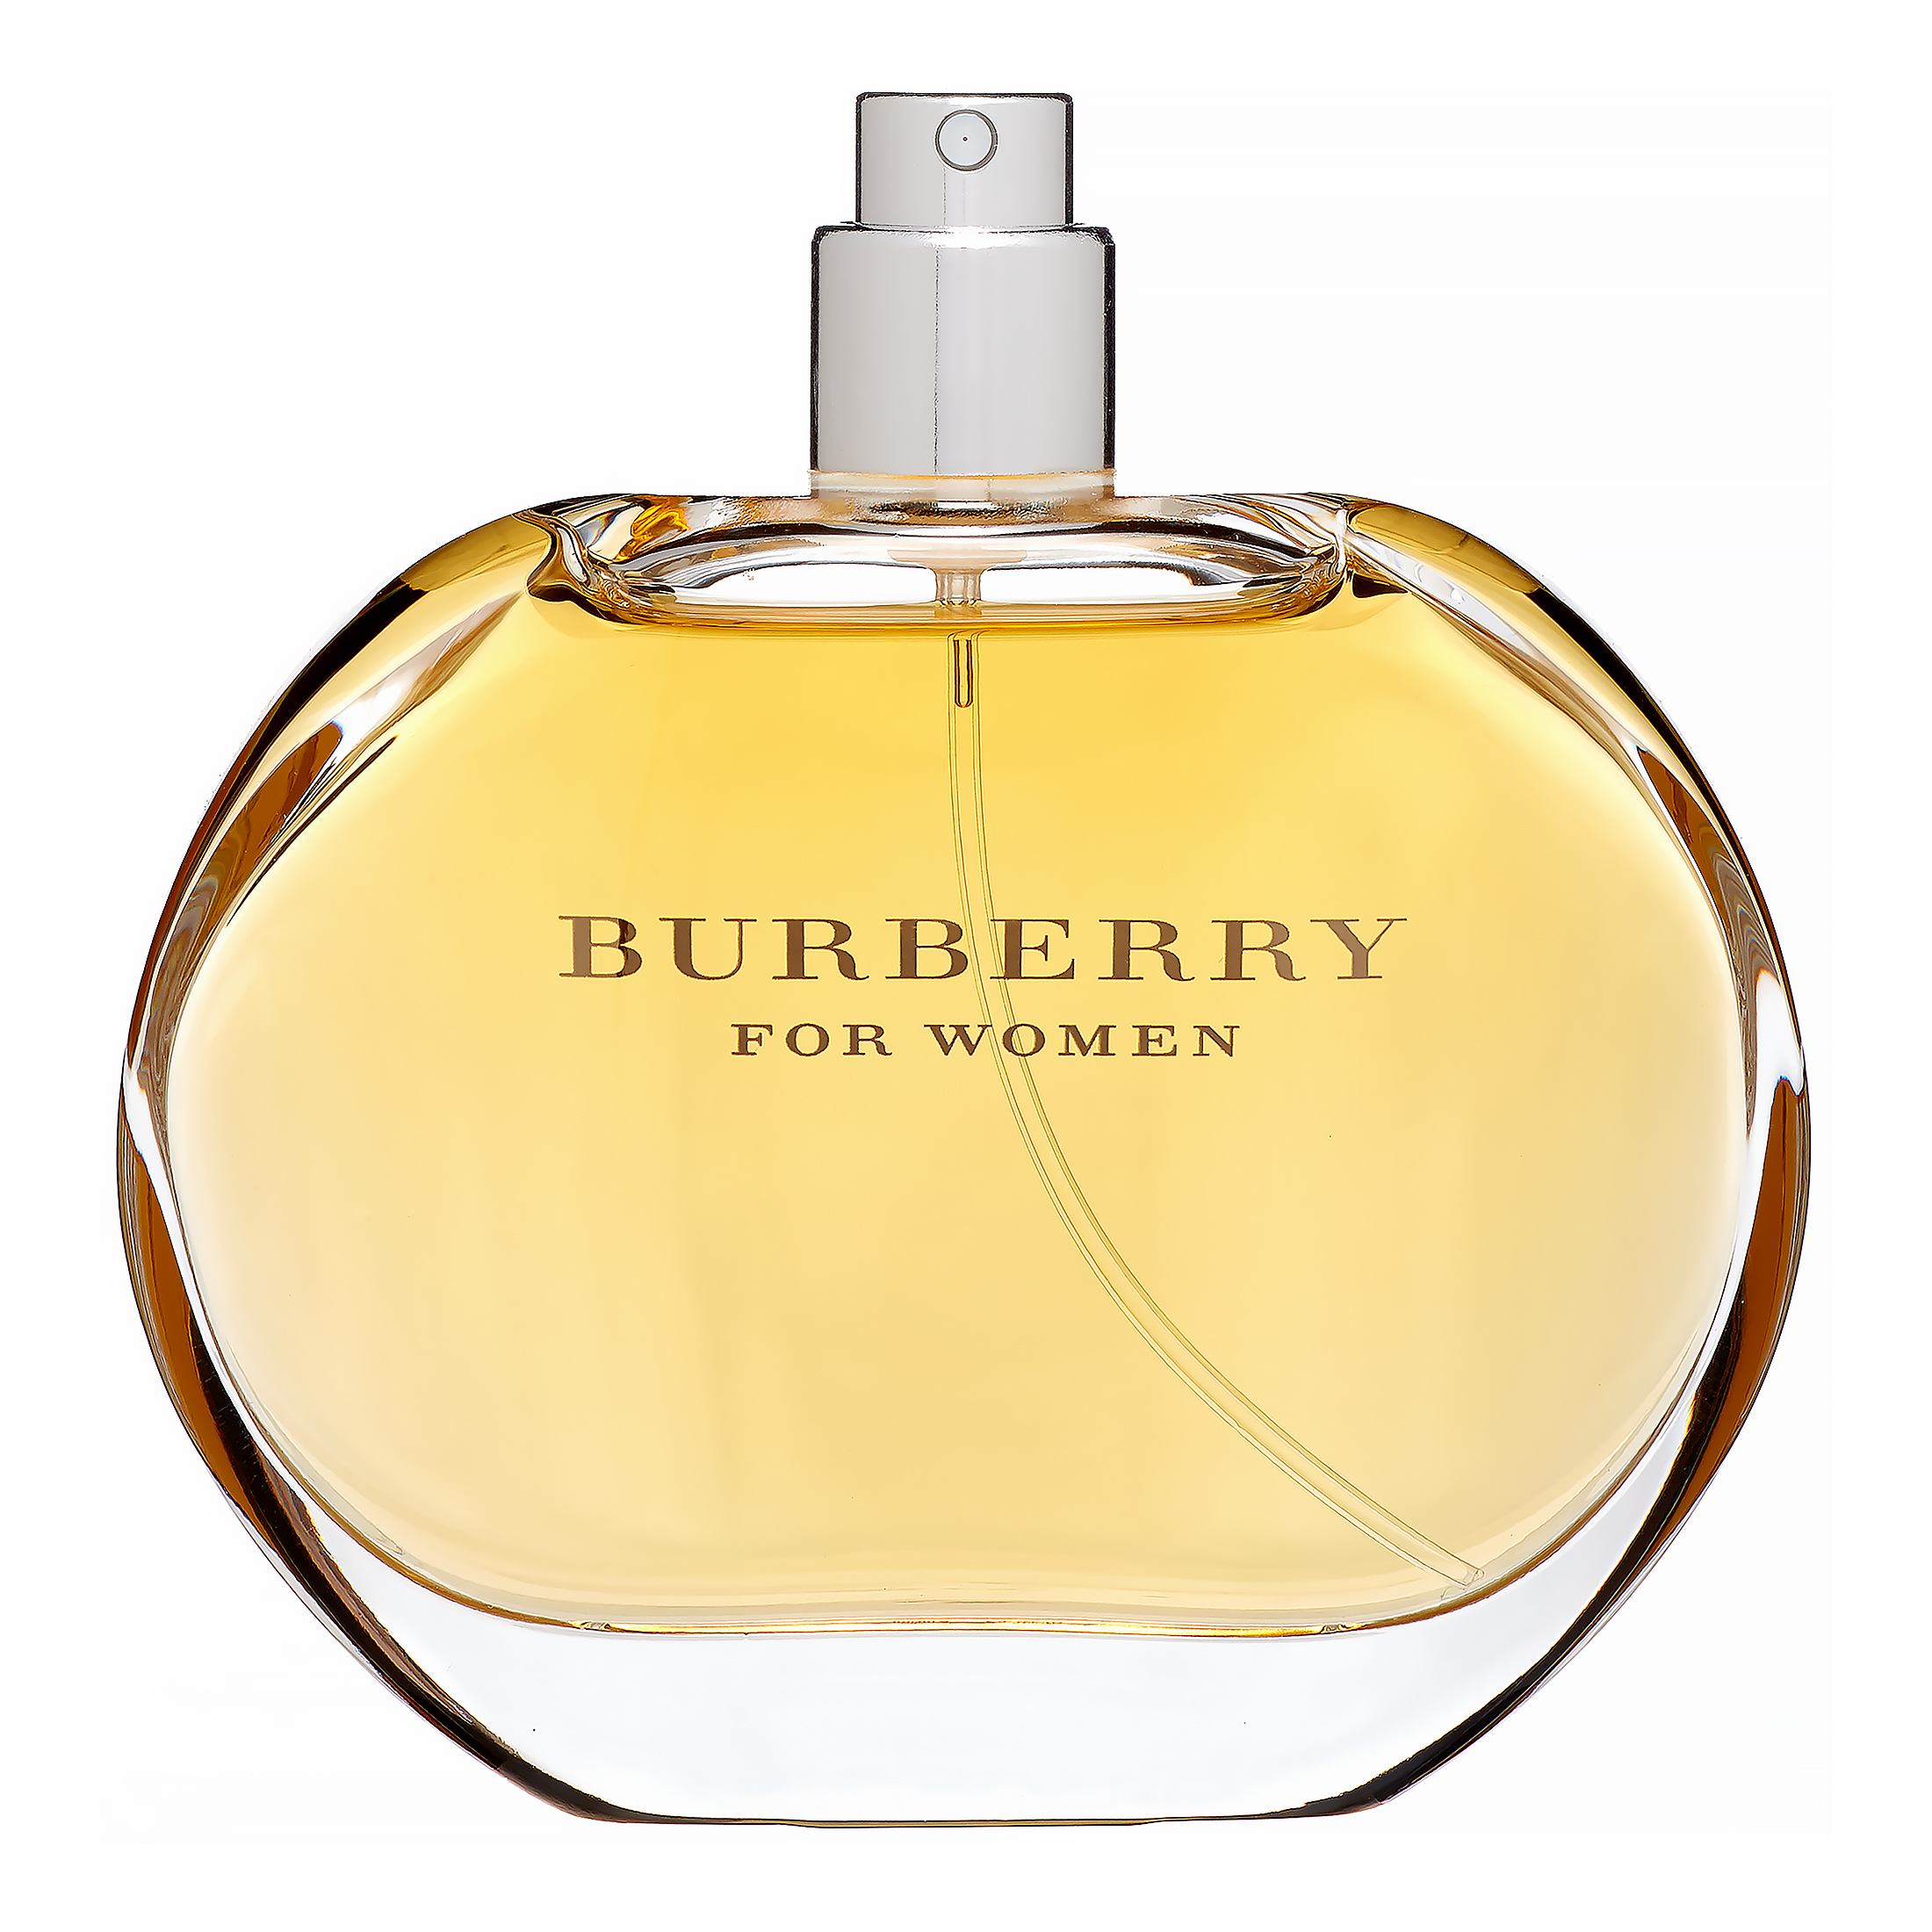 Burberry Classic Eau De Parfum, Perfume for Women, 3.3 oz - image 2 of 6